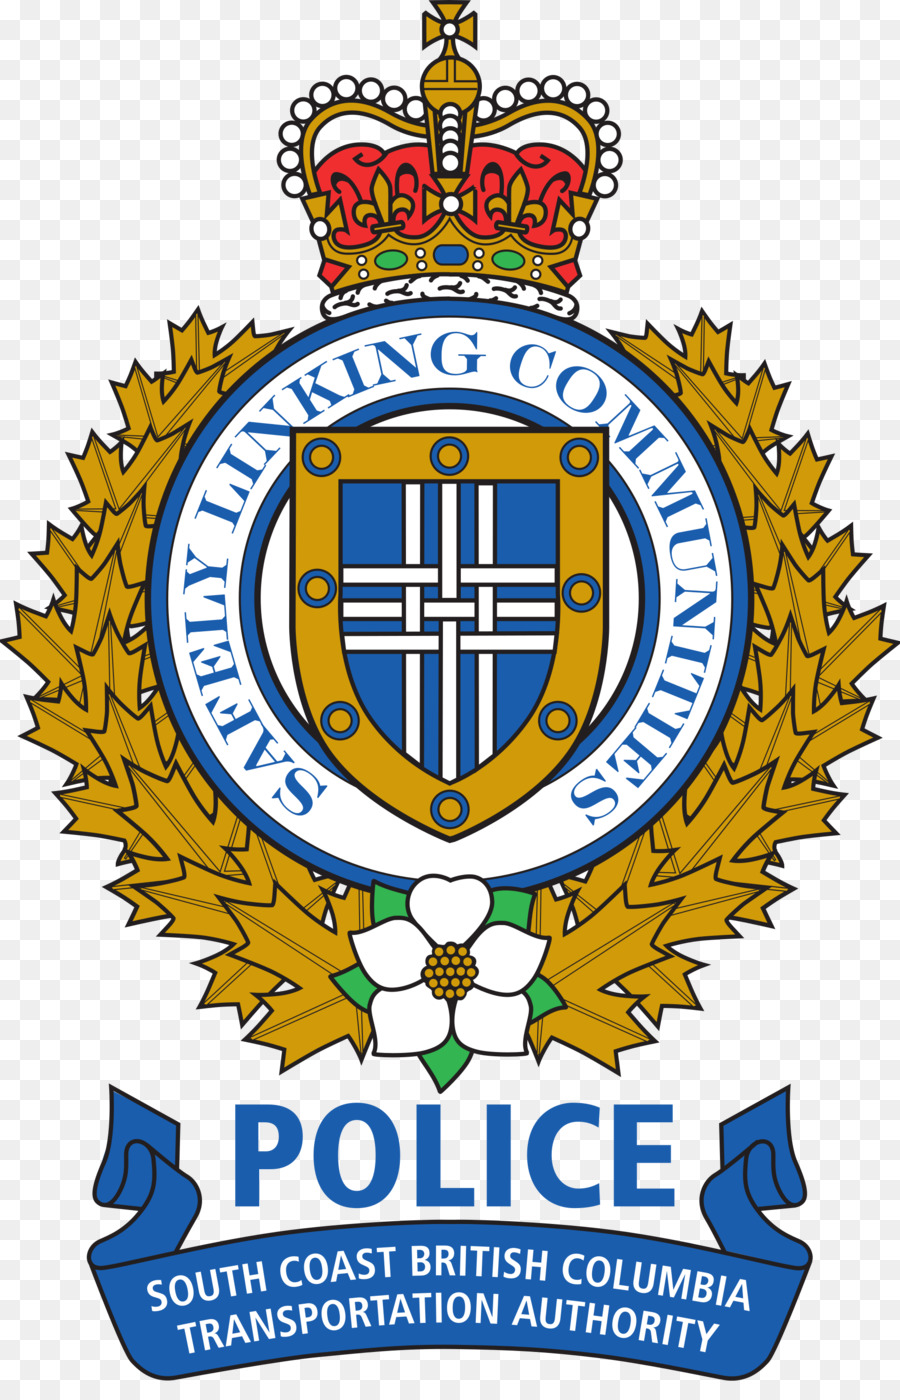 Metropolitana Di Vancouver Transito Di Polizia TransLink Royal Canadian Mounted Police - la polizia